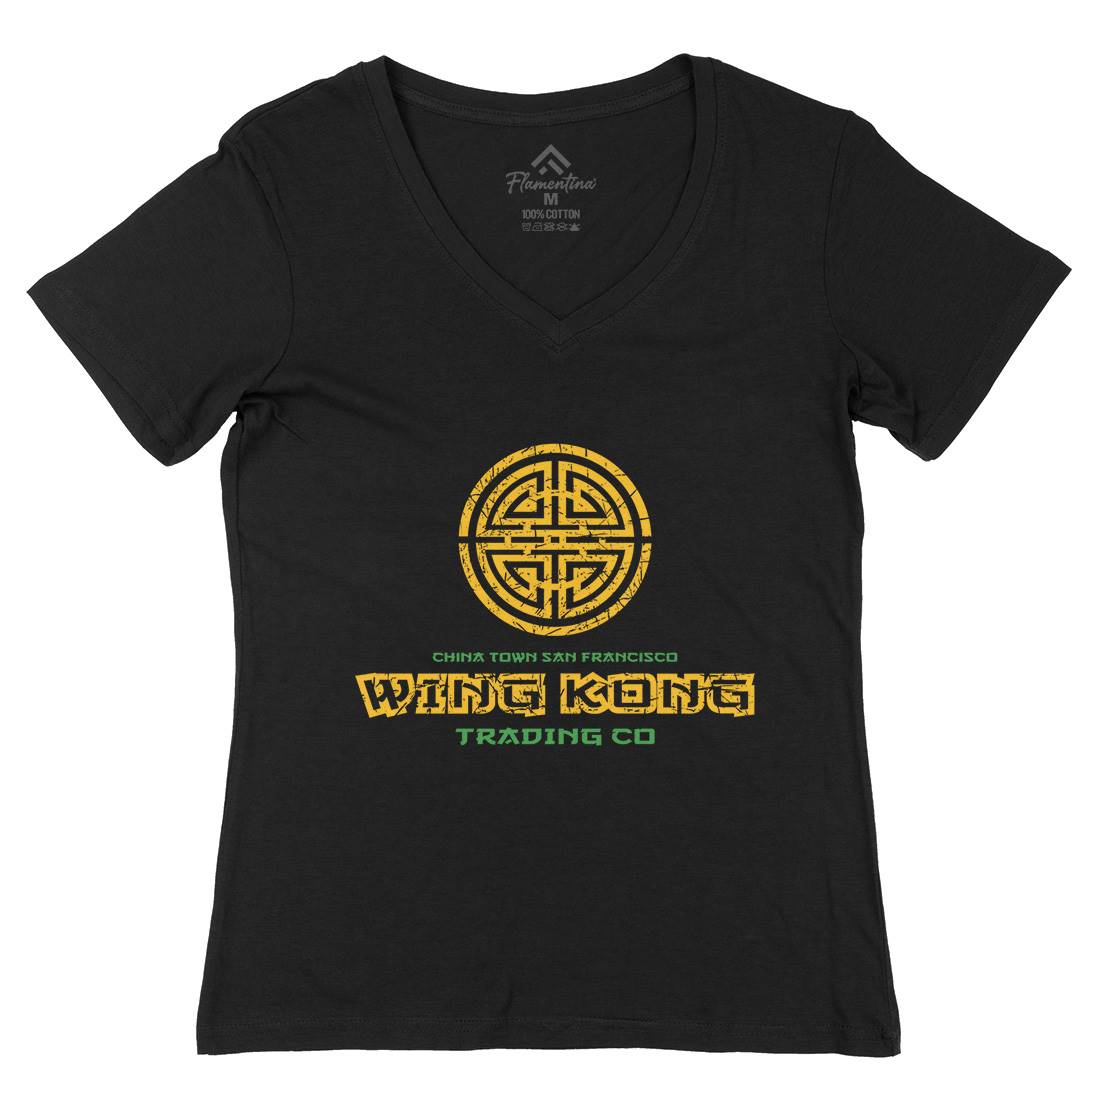 Wing Kong Exchange Womens Organic V-Neck T-Shirt Asian D358